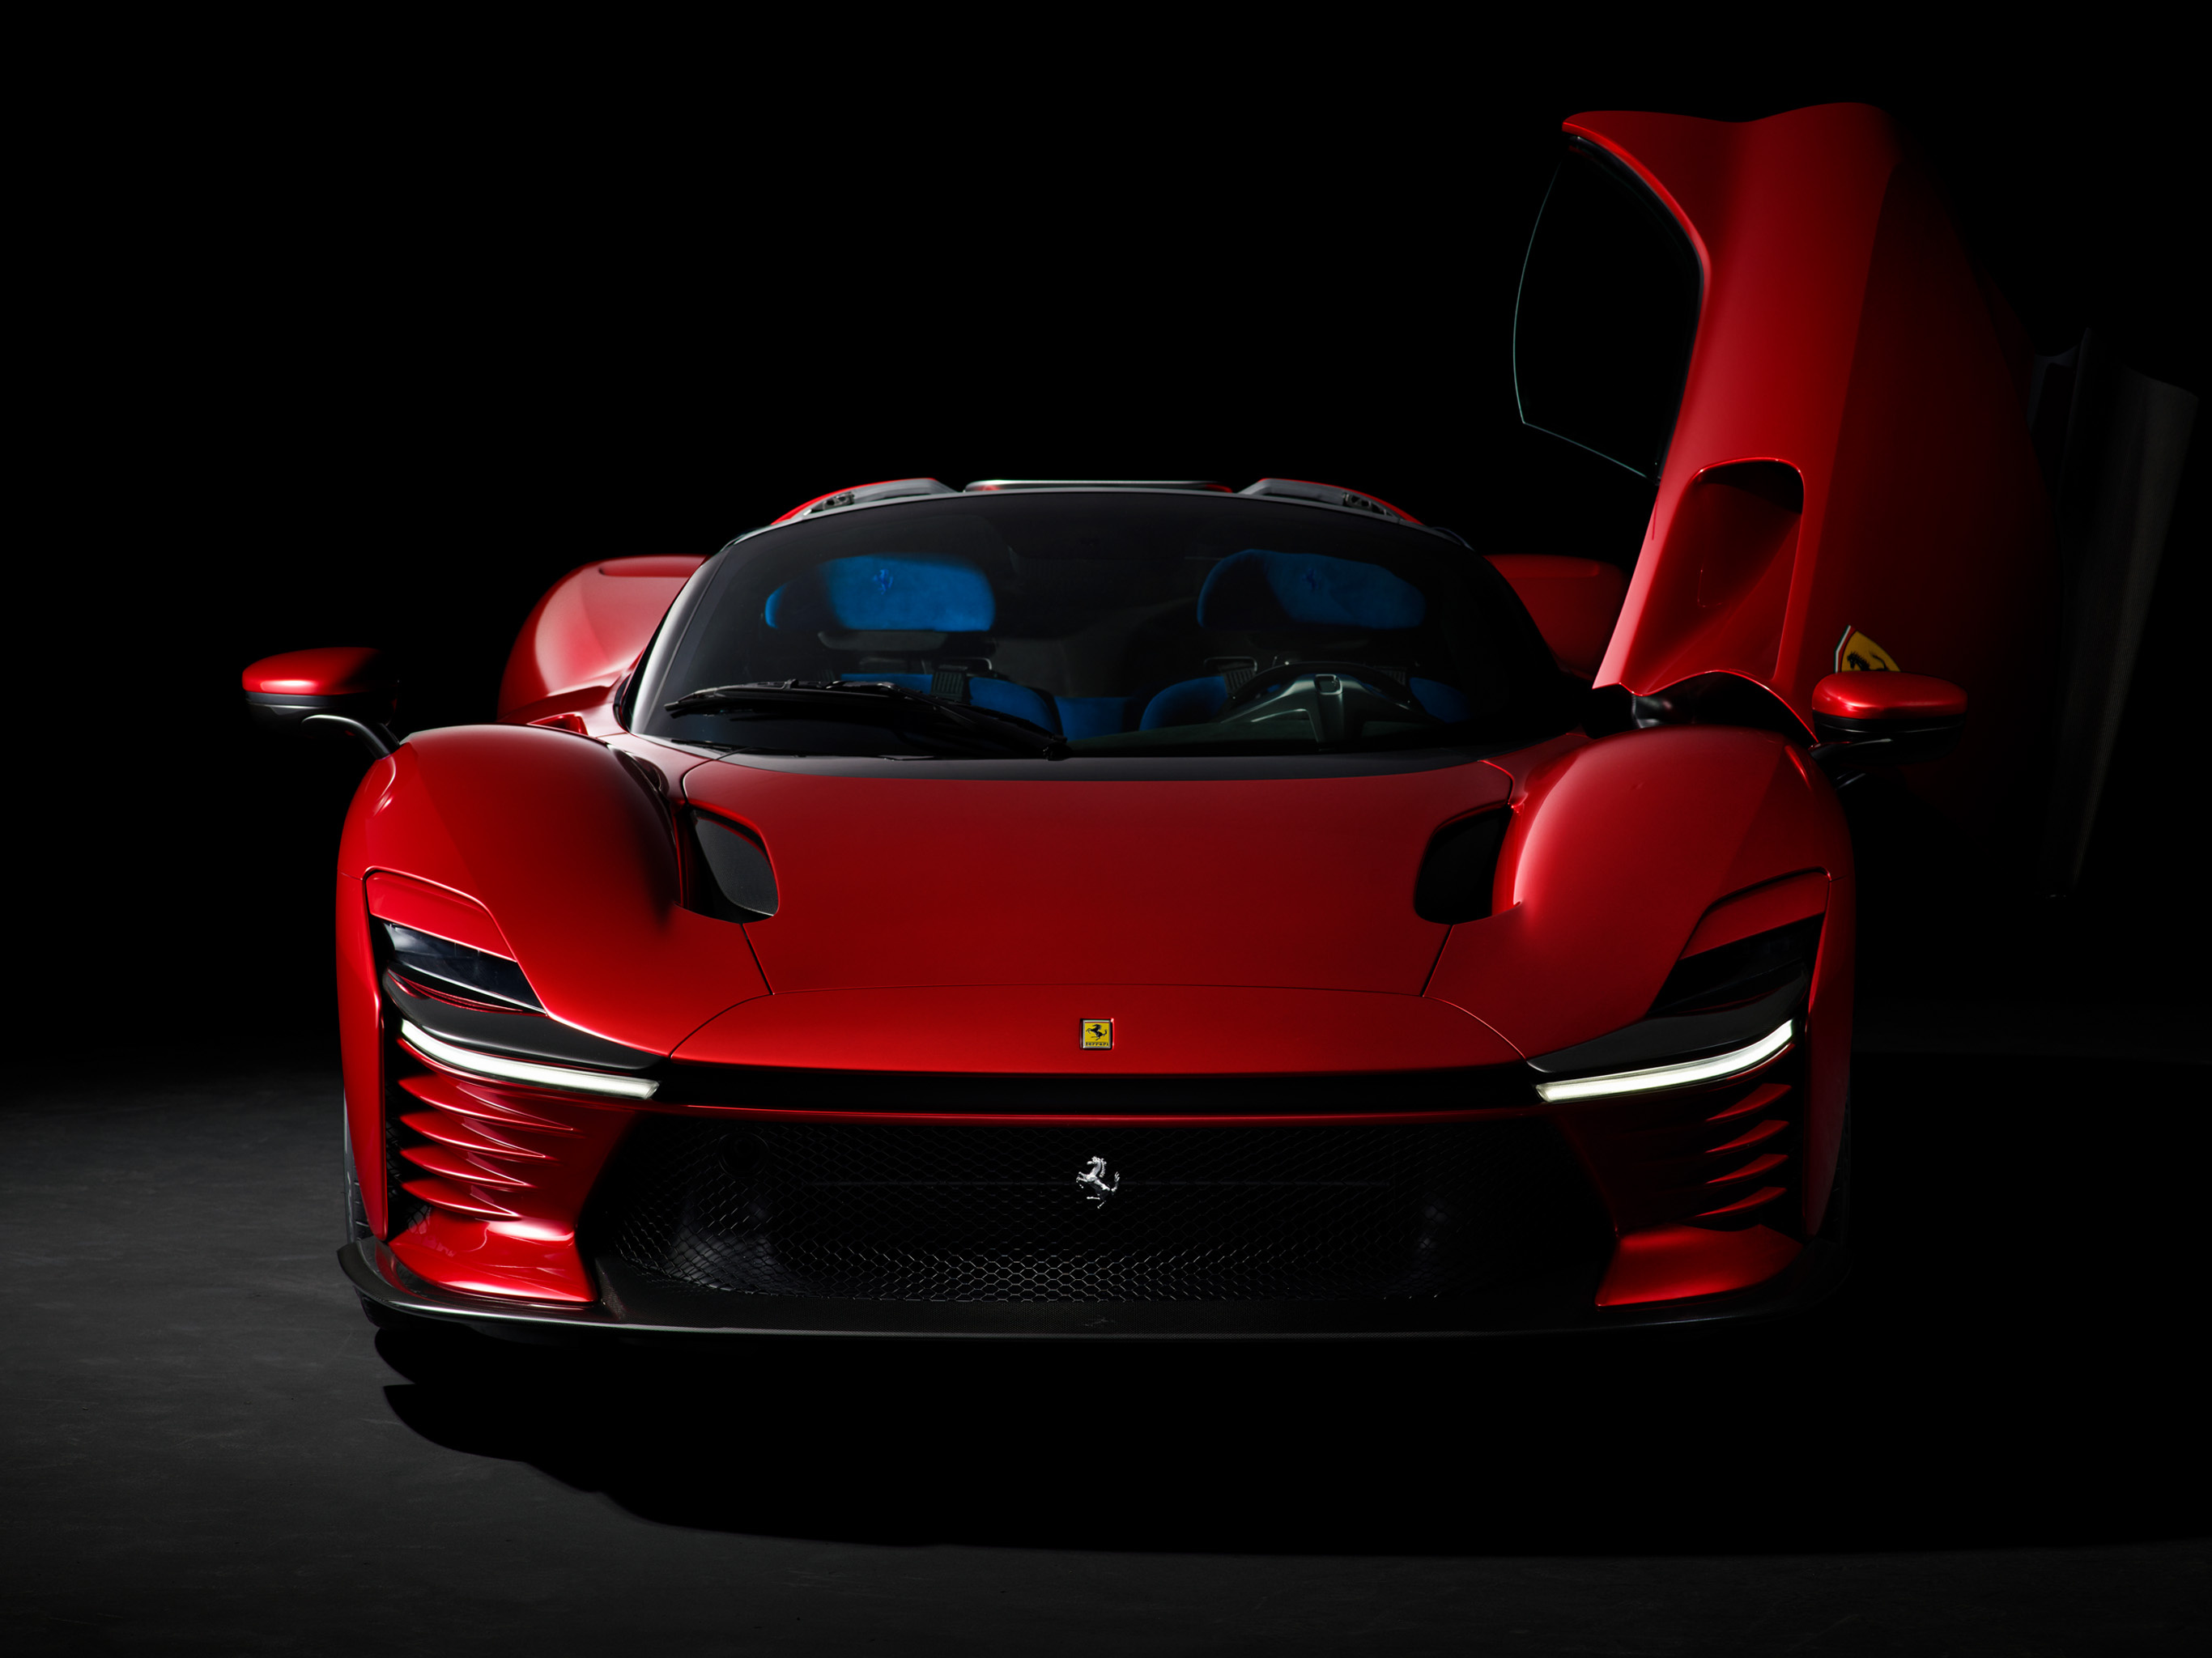 Ferrari Daytona, SP3 limited edition, HD wallpapers and backgrounds, Exquisite craftsmanship, 2740x2050 HD Desktop